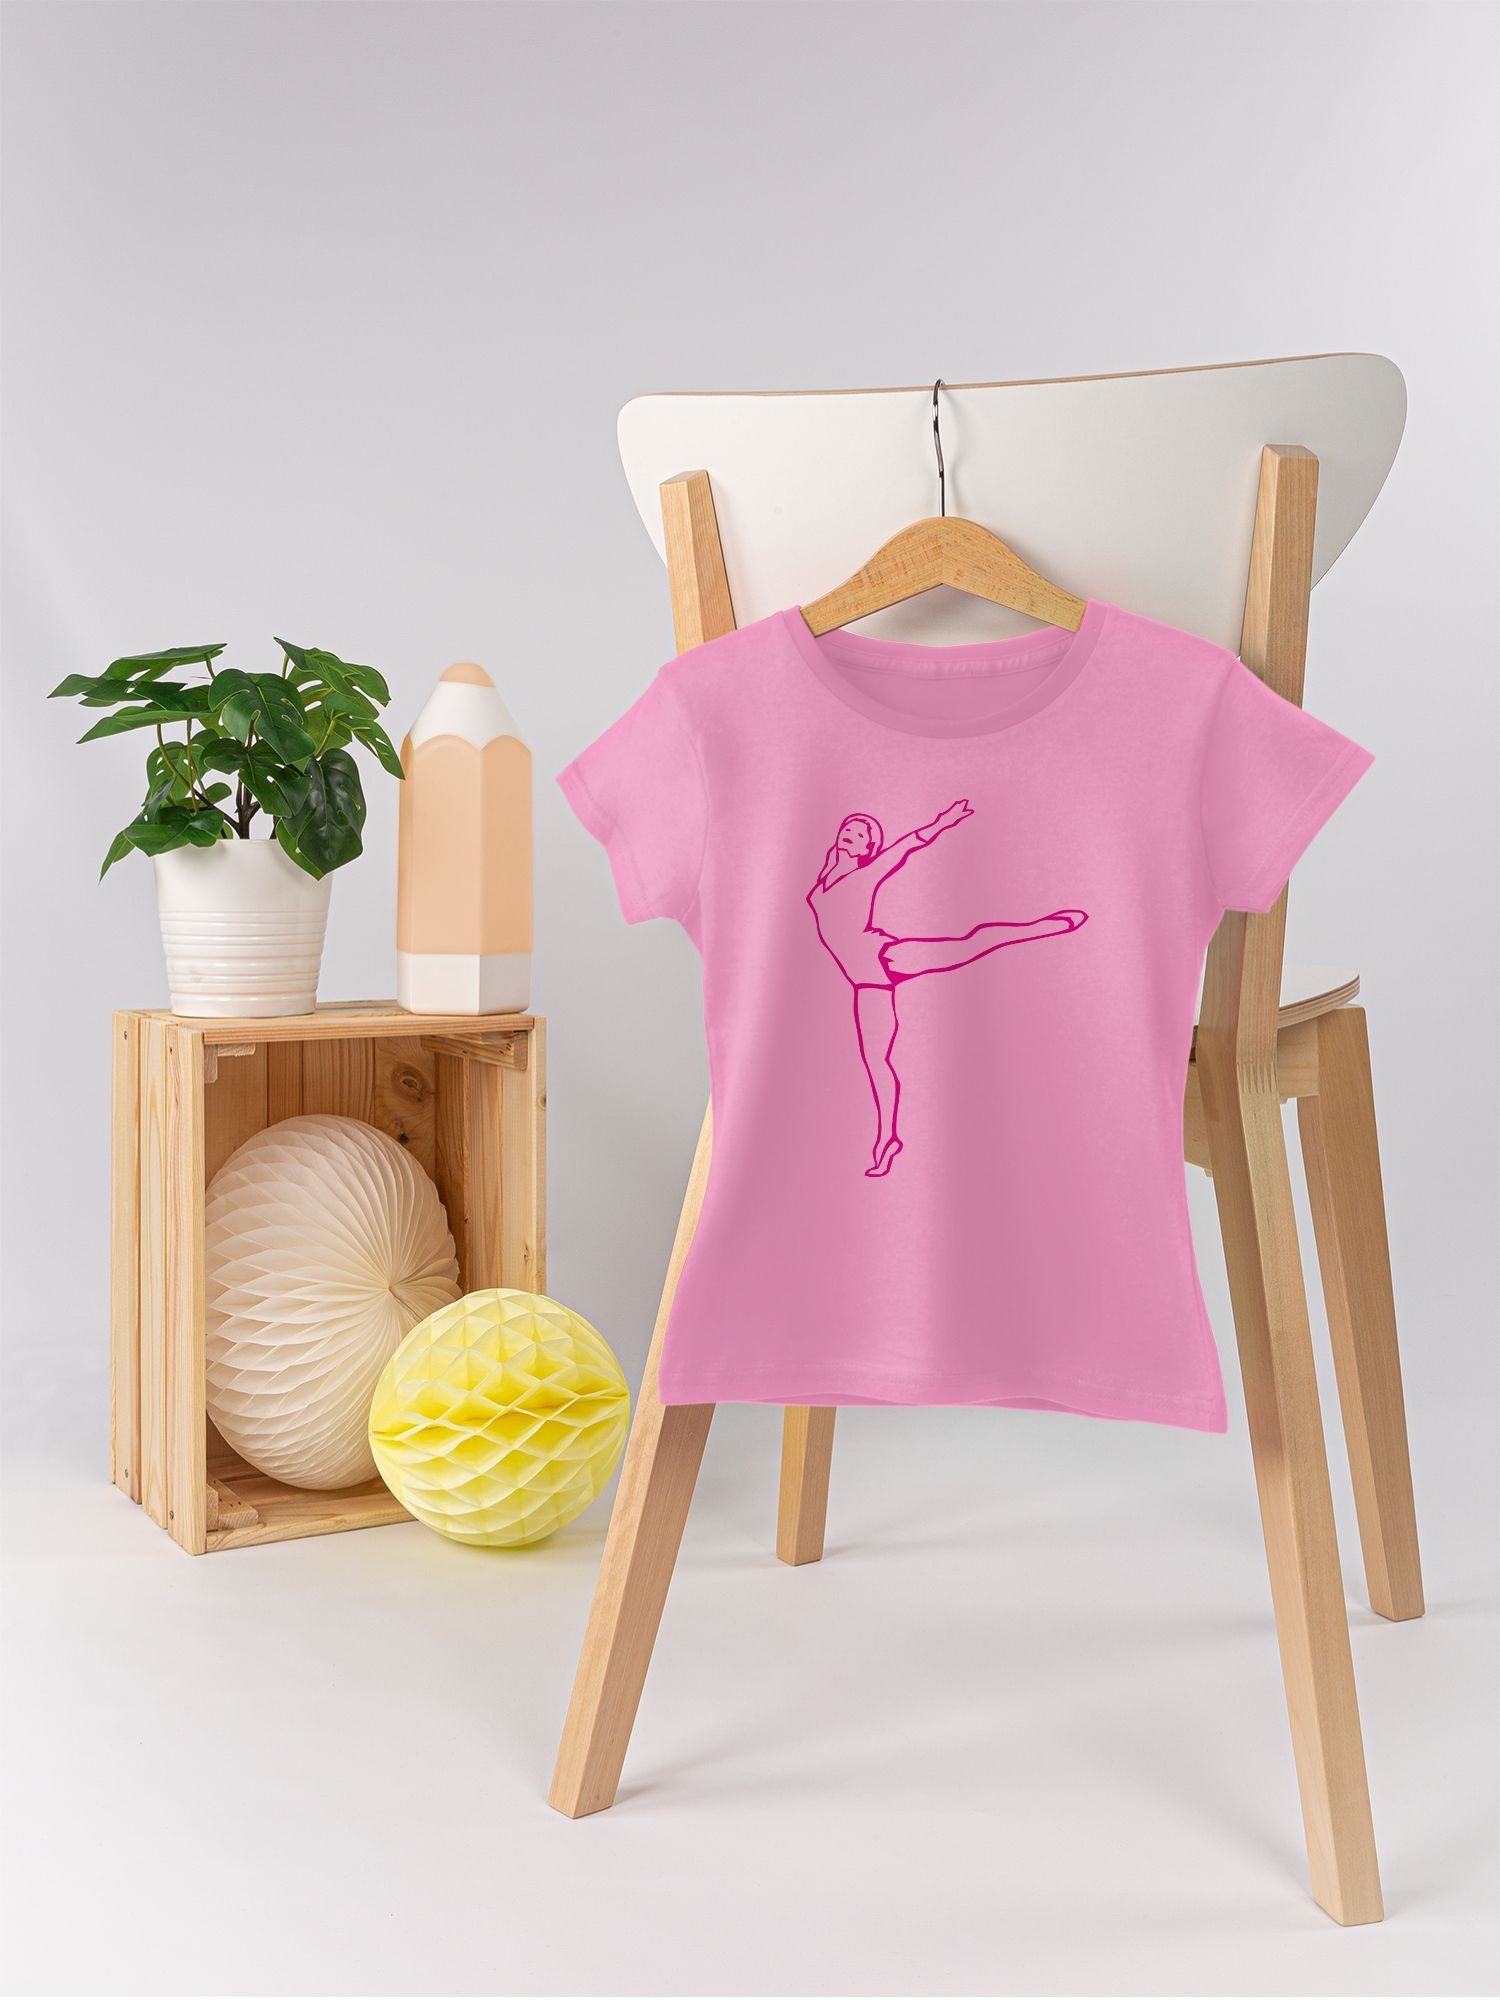 Kleidung Rhythmische Sportgymnastik Sport 3 Shirtracer Kinder T-Shirt Rosa